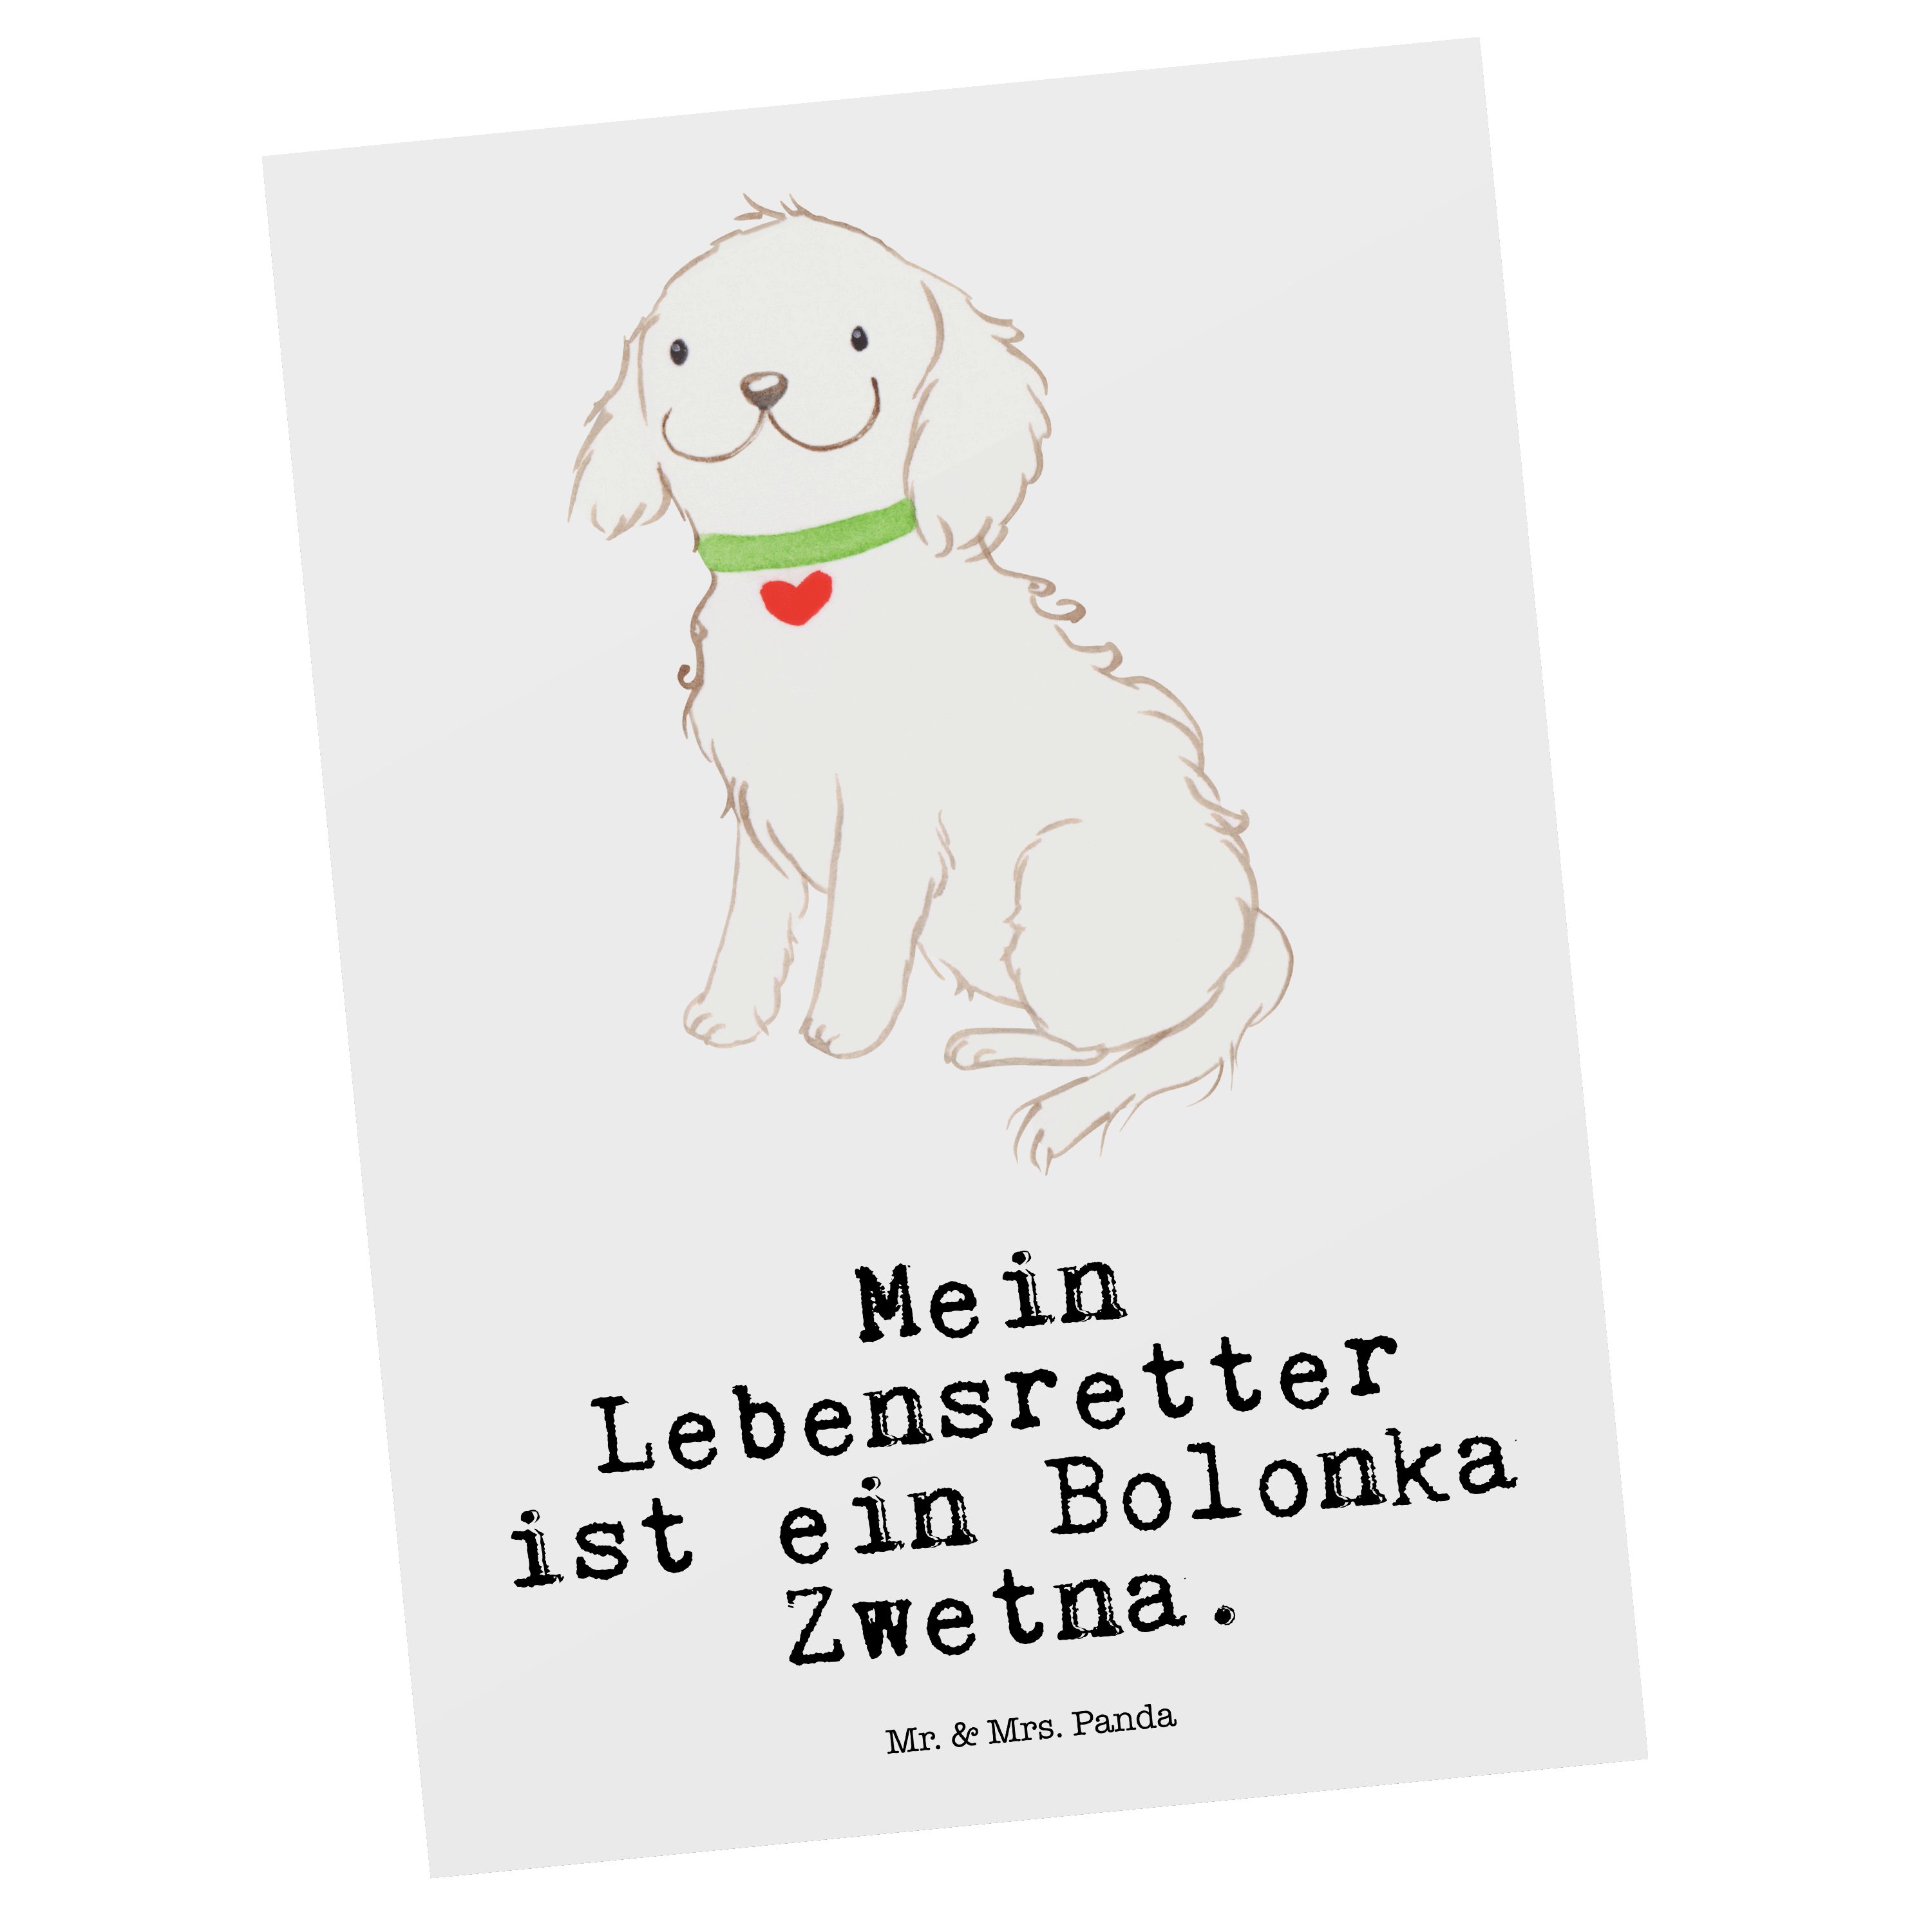 Mr. & Mrs. Panda Postkarte Bolonka Zwetna Lebensretter - Weiß - Geschenk, Grußkarte, Einladung